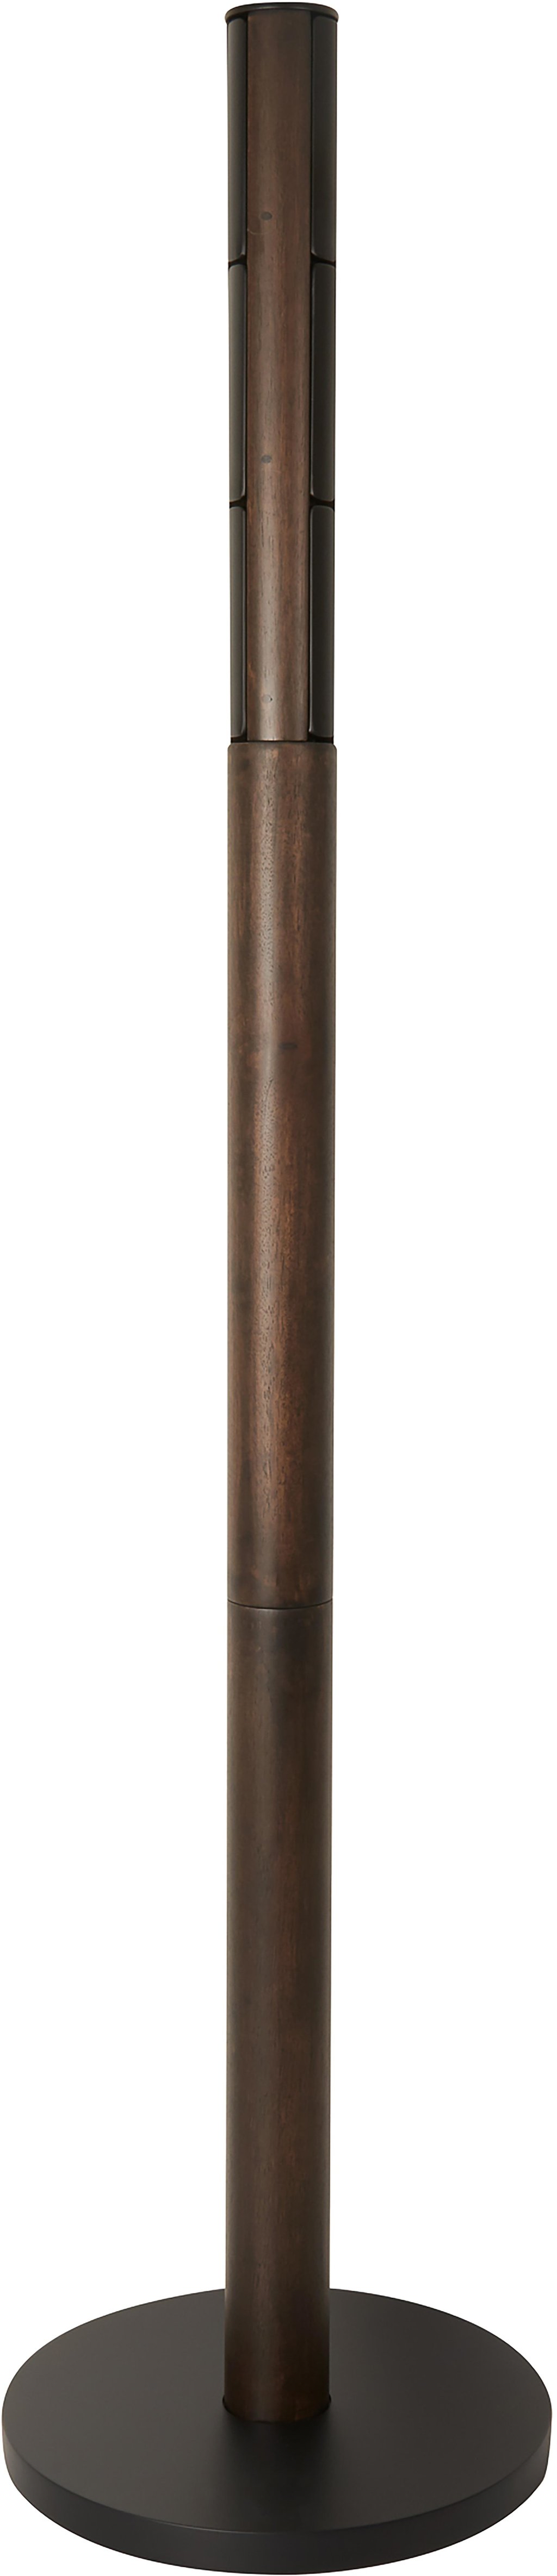 Umbra Flapper naulakko 169cm musta/pähkinäpuu